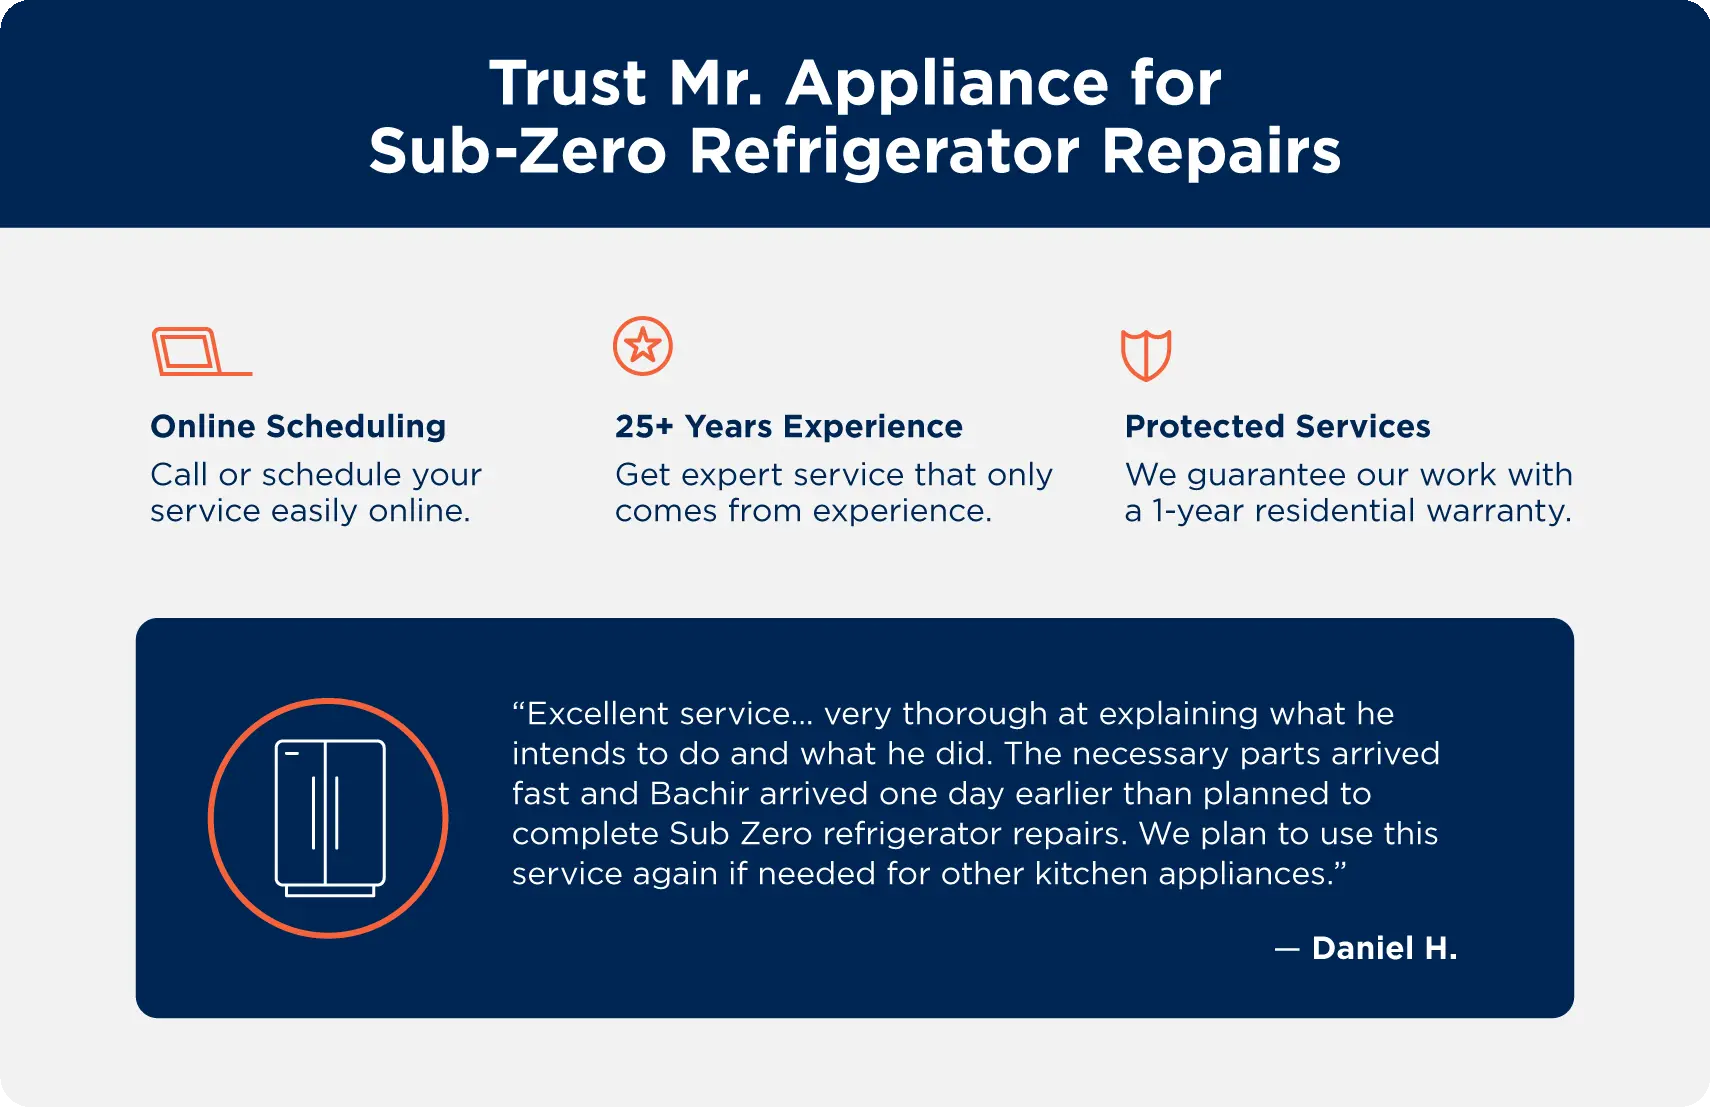 Testimonials for Mr. Appliance Sub-Zero refrigerator repairs.